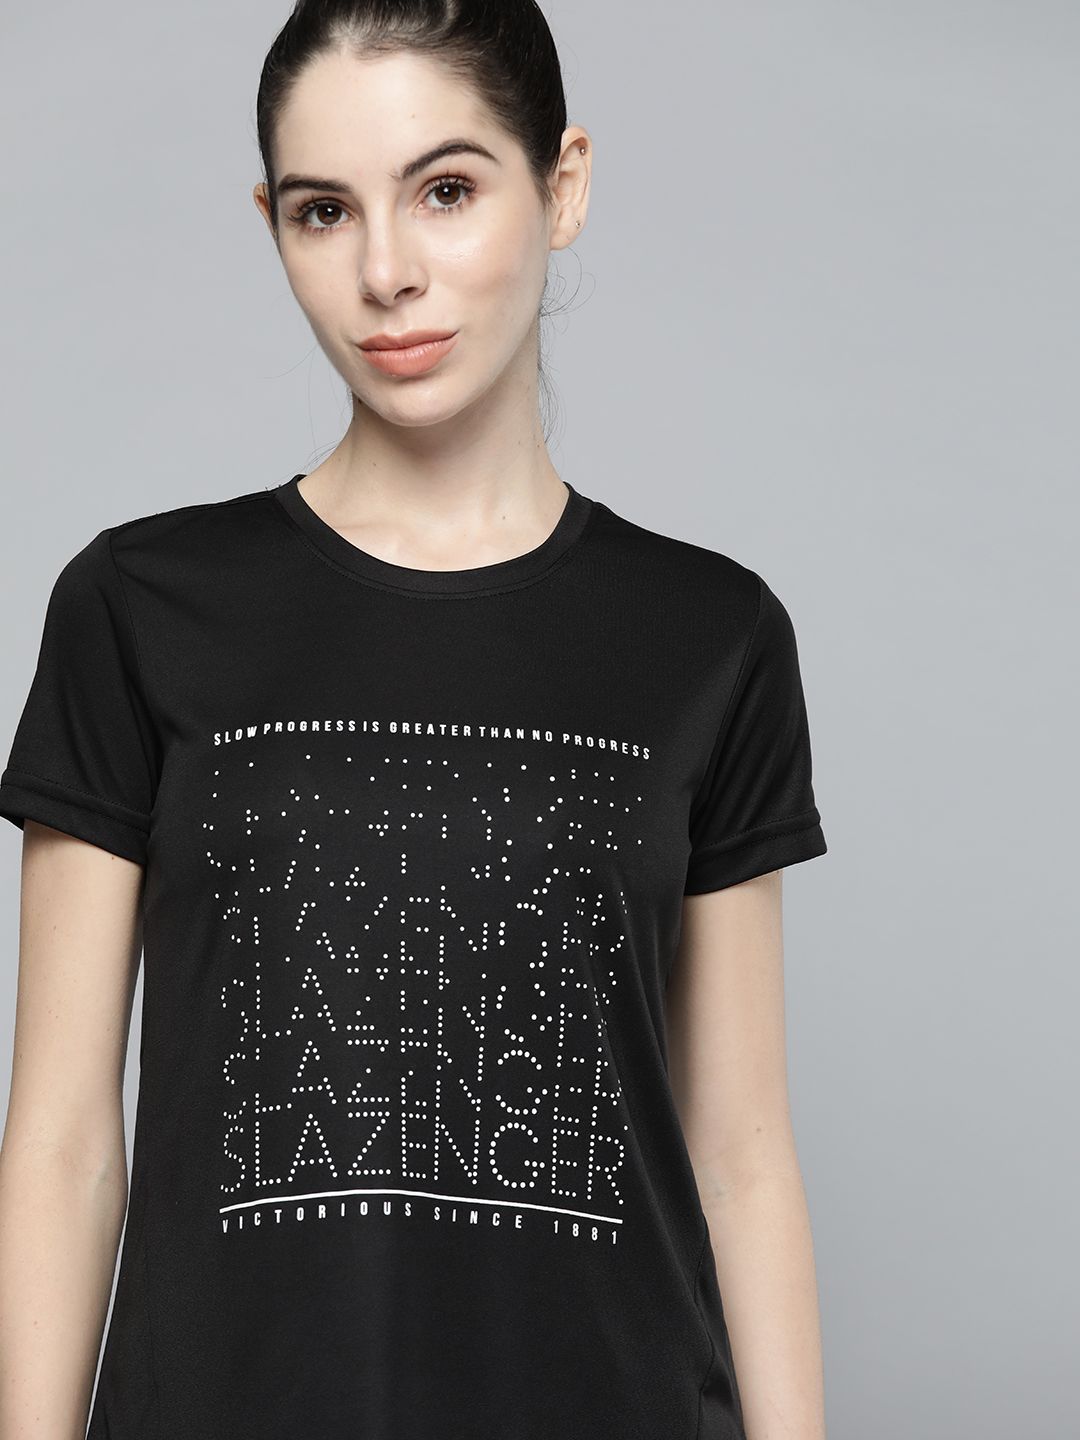 Slazenger Women Black & White Typography Printed T-shirt Price in India